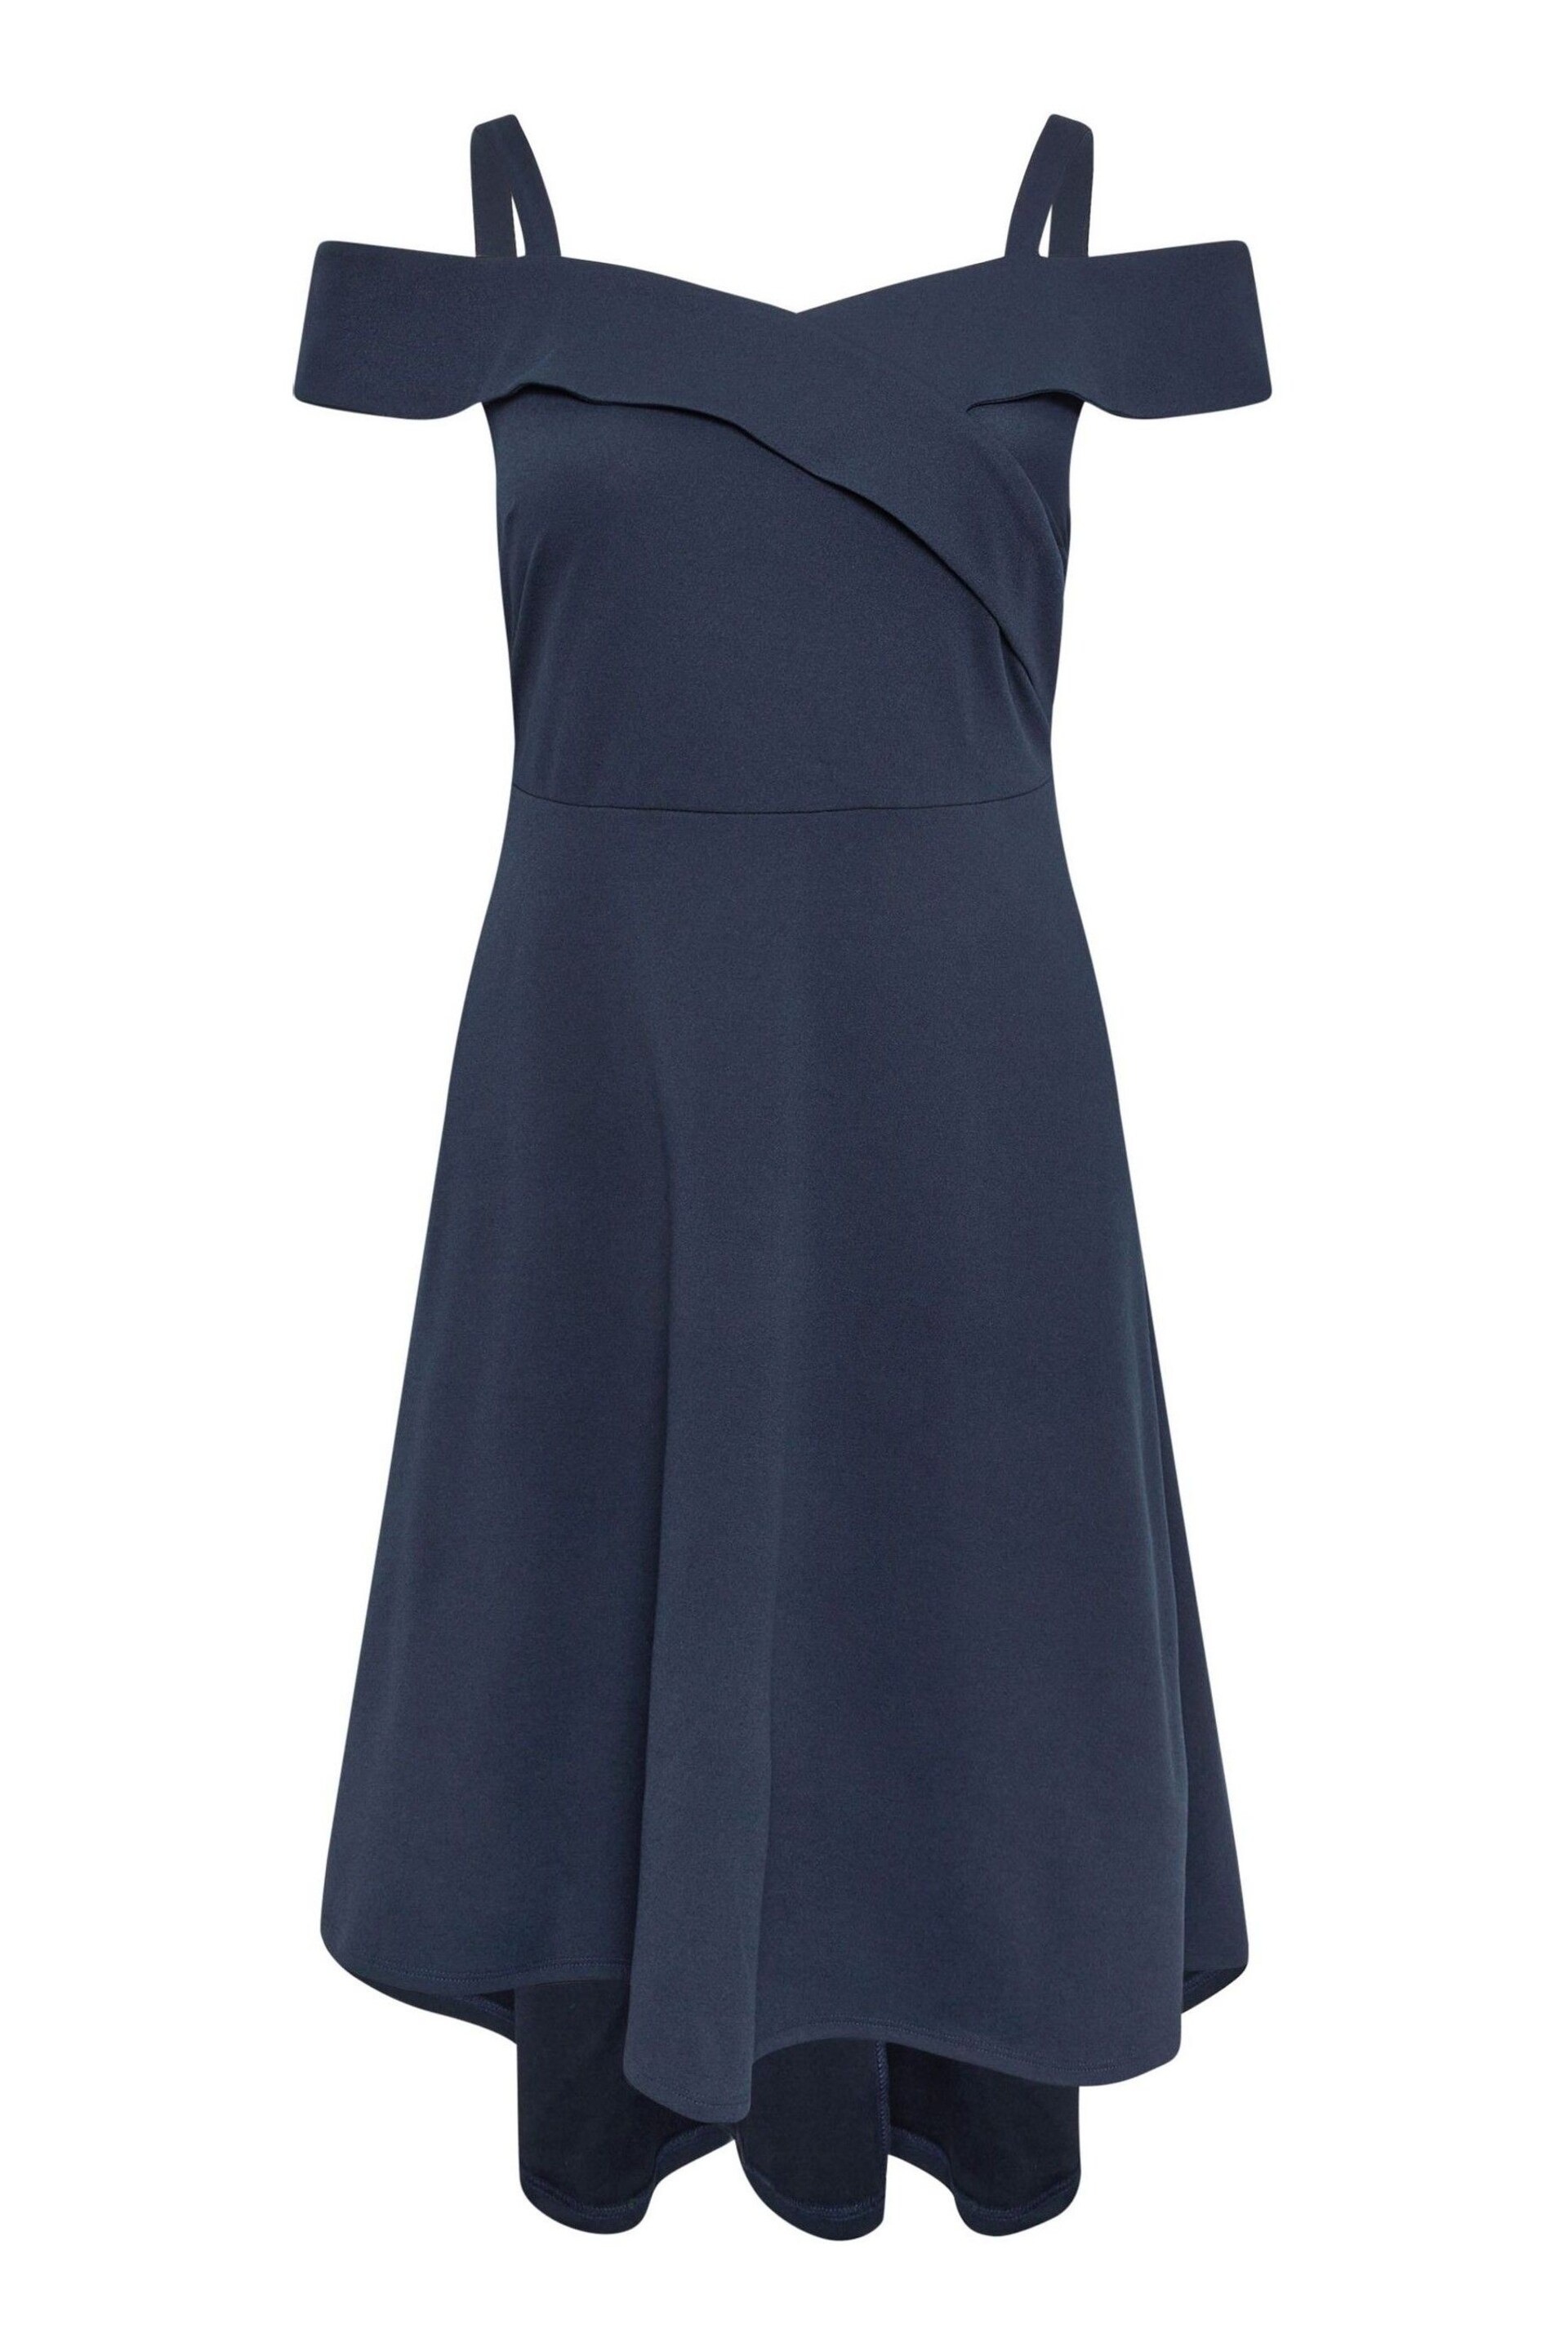 YOURS LONDON Curve Navy Blue Black Bardot Dipped Hem Dress - Image 5 of 5